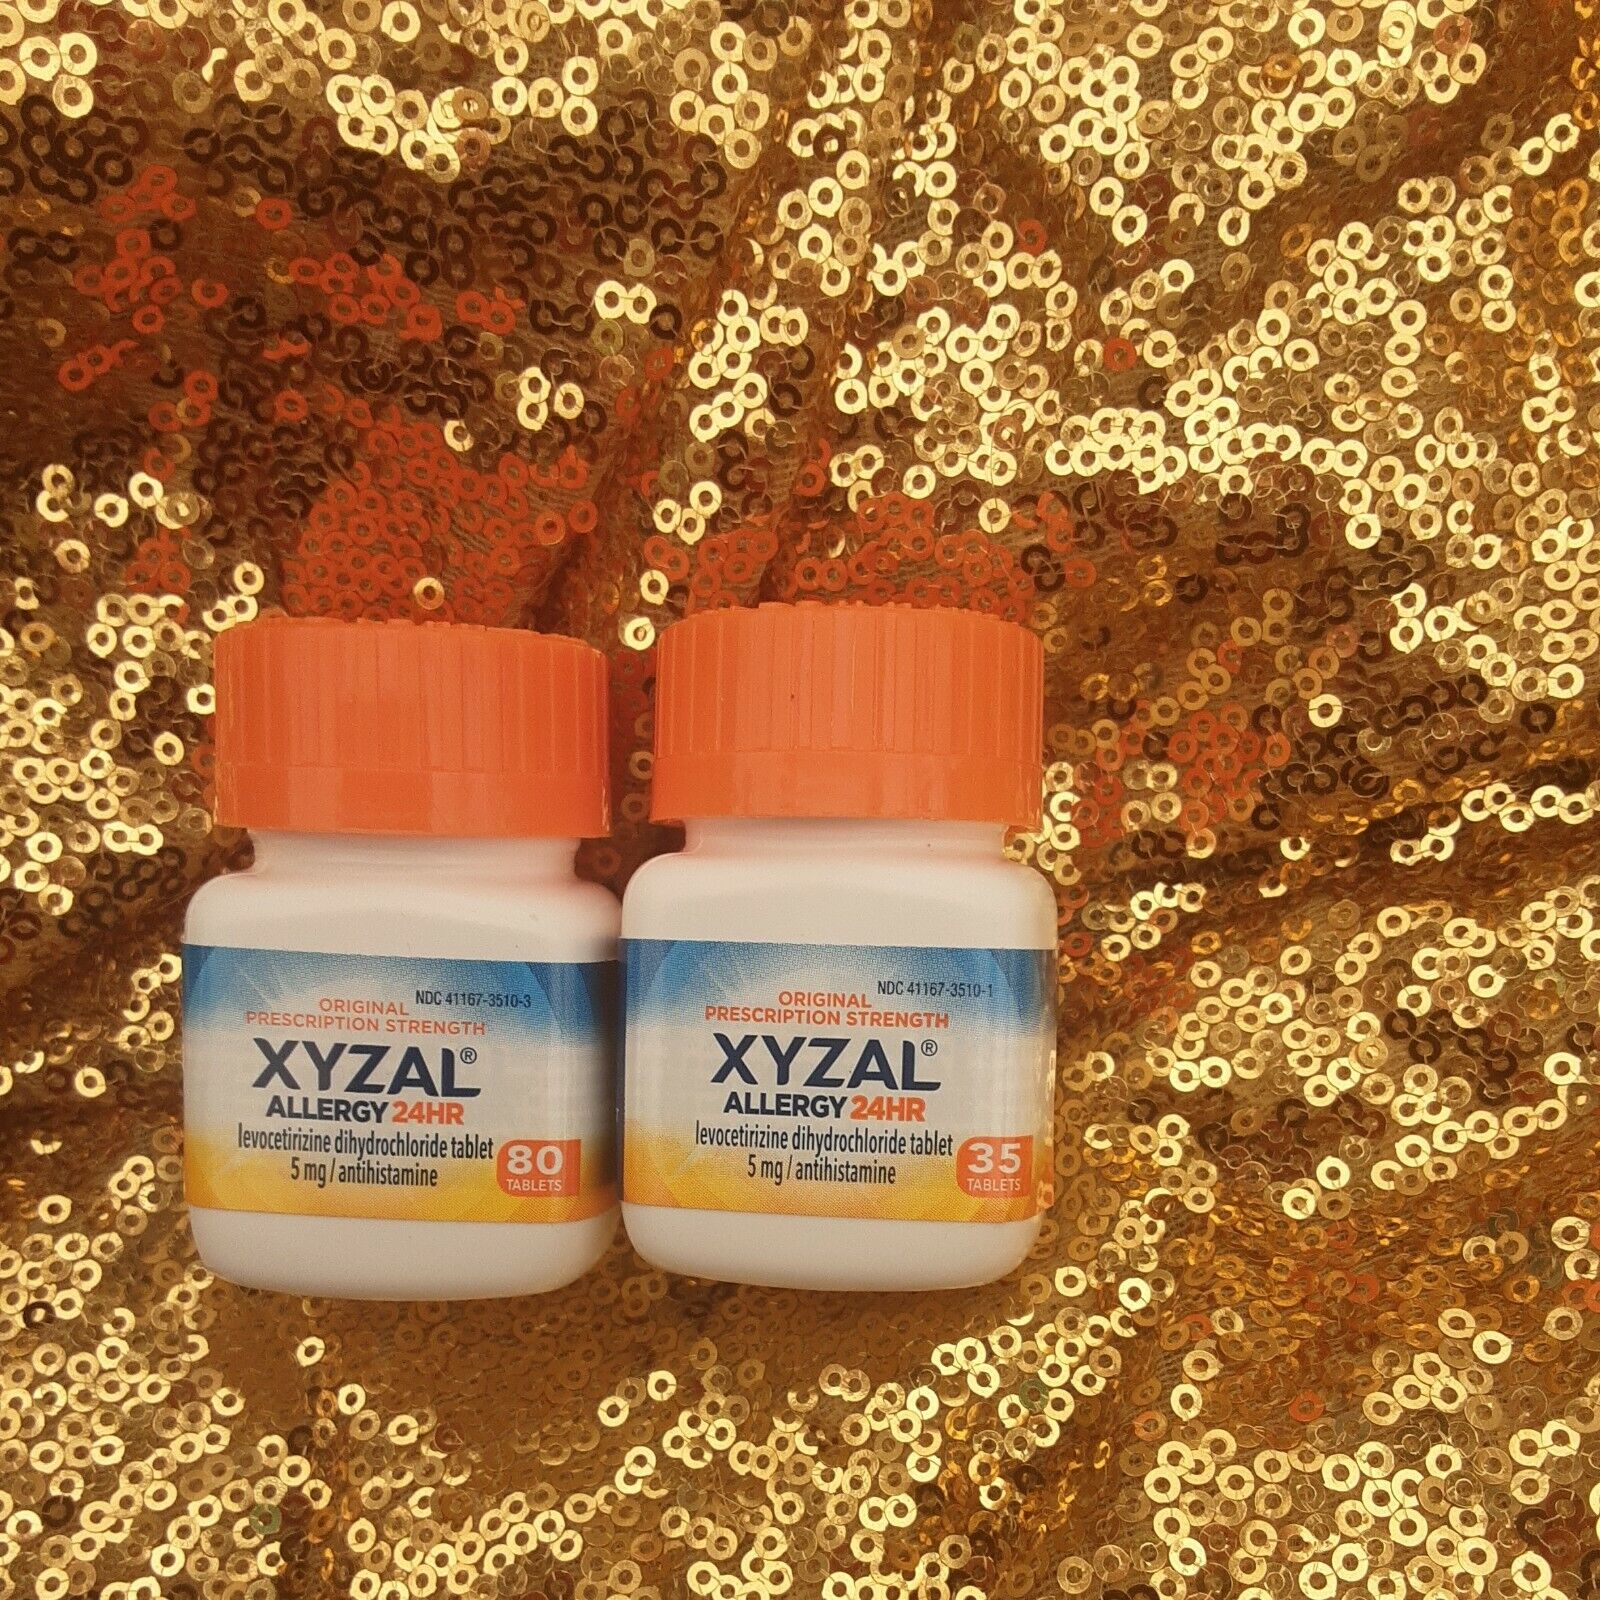 Fashionable Xyzal Under blast sales Allergy 24HR 5 mg - Exp. 23 08 Tablets 115